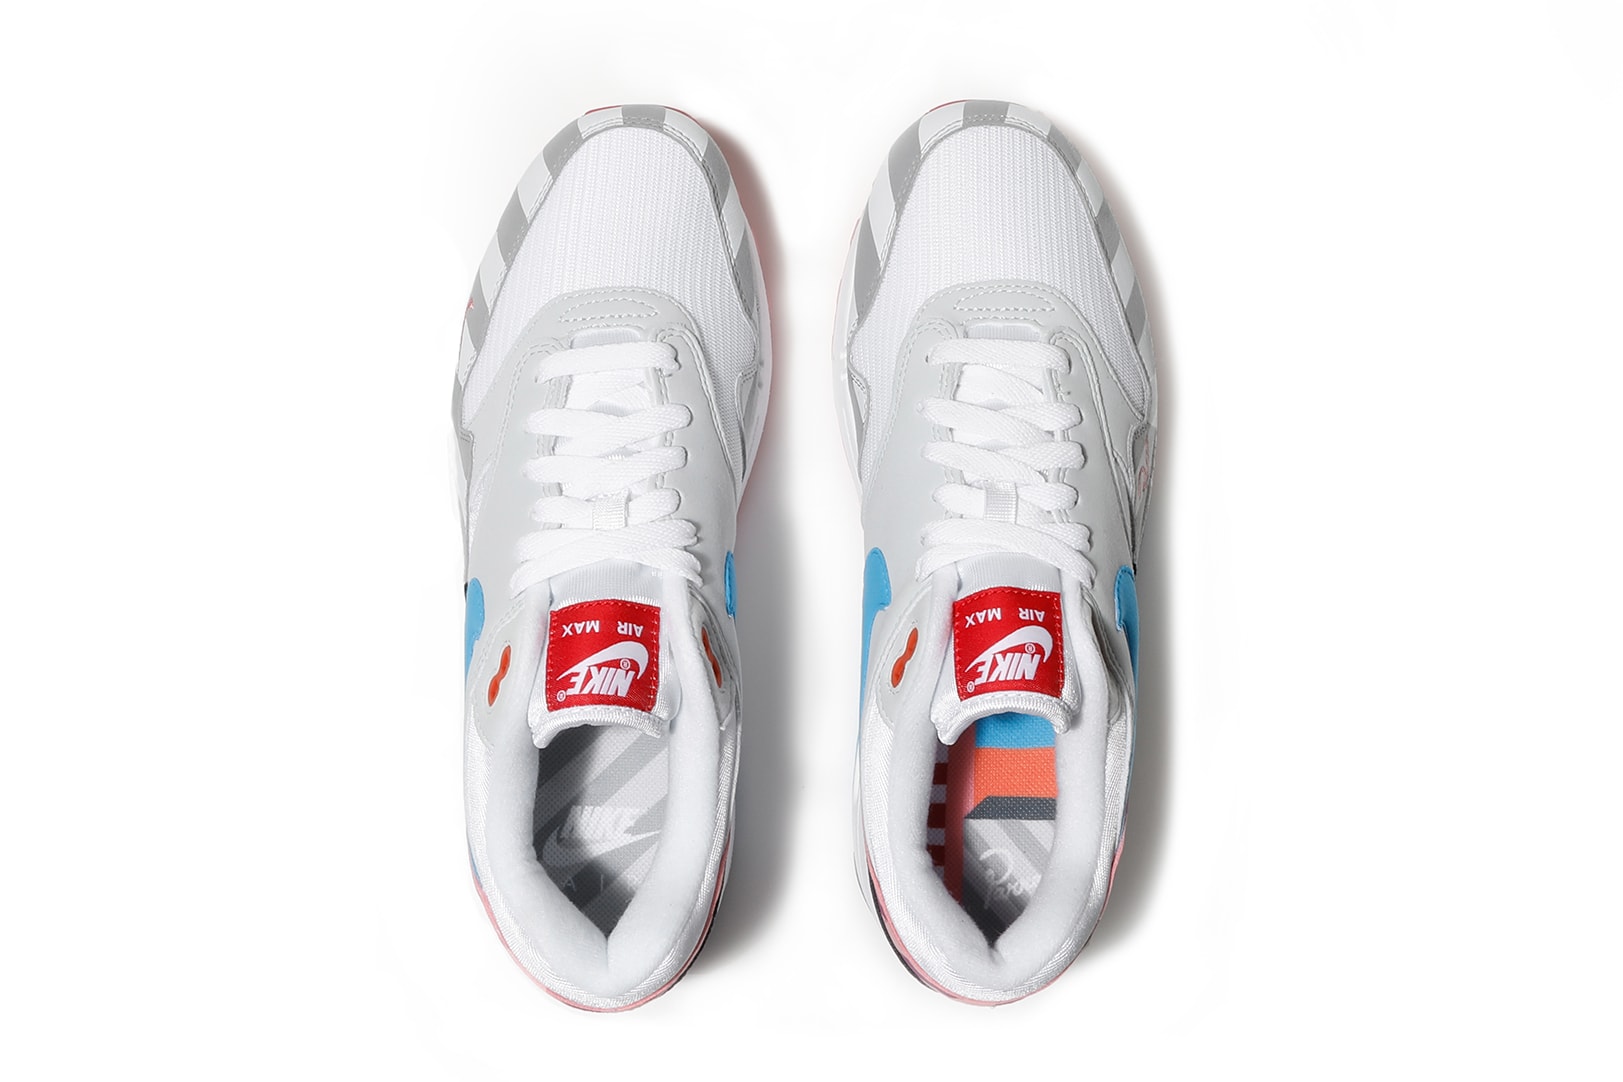 Nike x Parra Air Max 1 Spring Summer 2018 Bodega sneaker Release Details Information First Look Closer Look Information